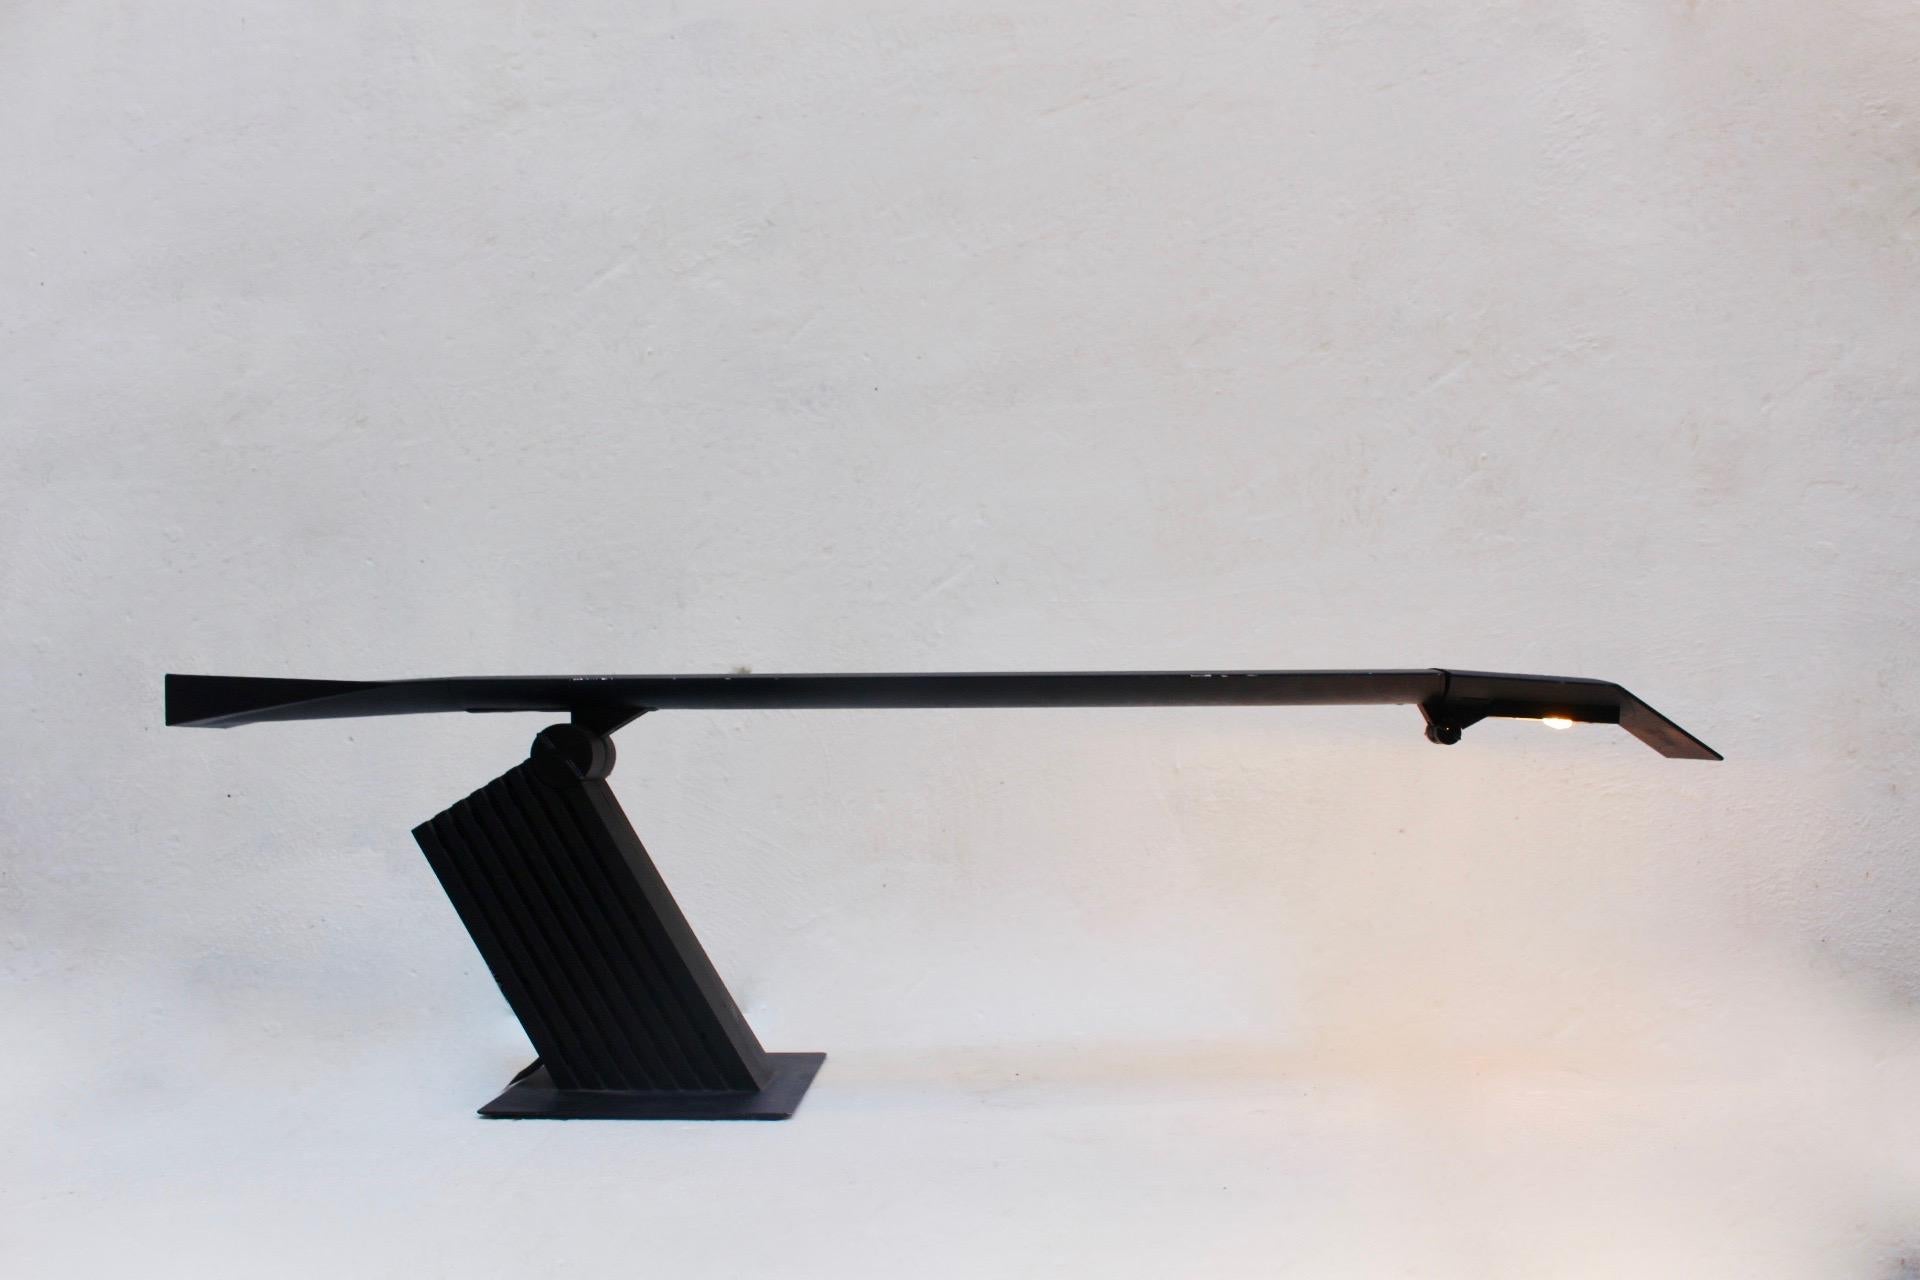 Modernist black desk lamp by Hans Von Klier for Bilumen, Italy, 1980s.
Bulb is included.